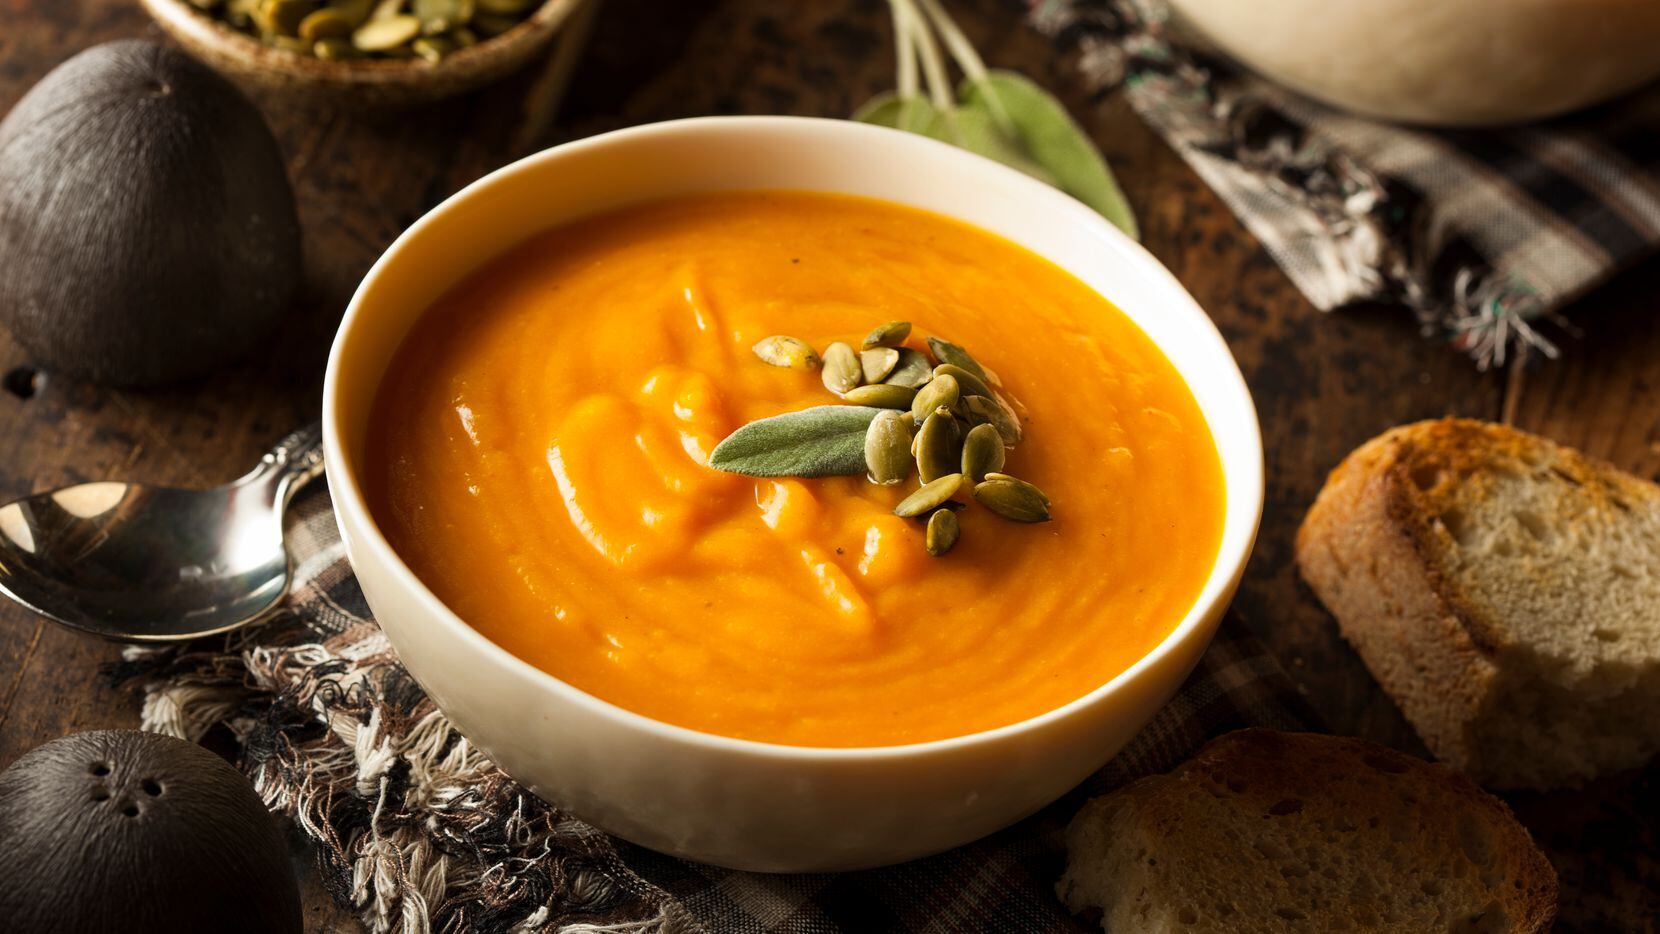 Do you like your soups smooth or chunky?